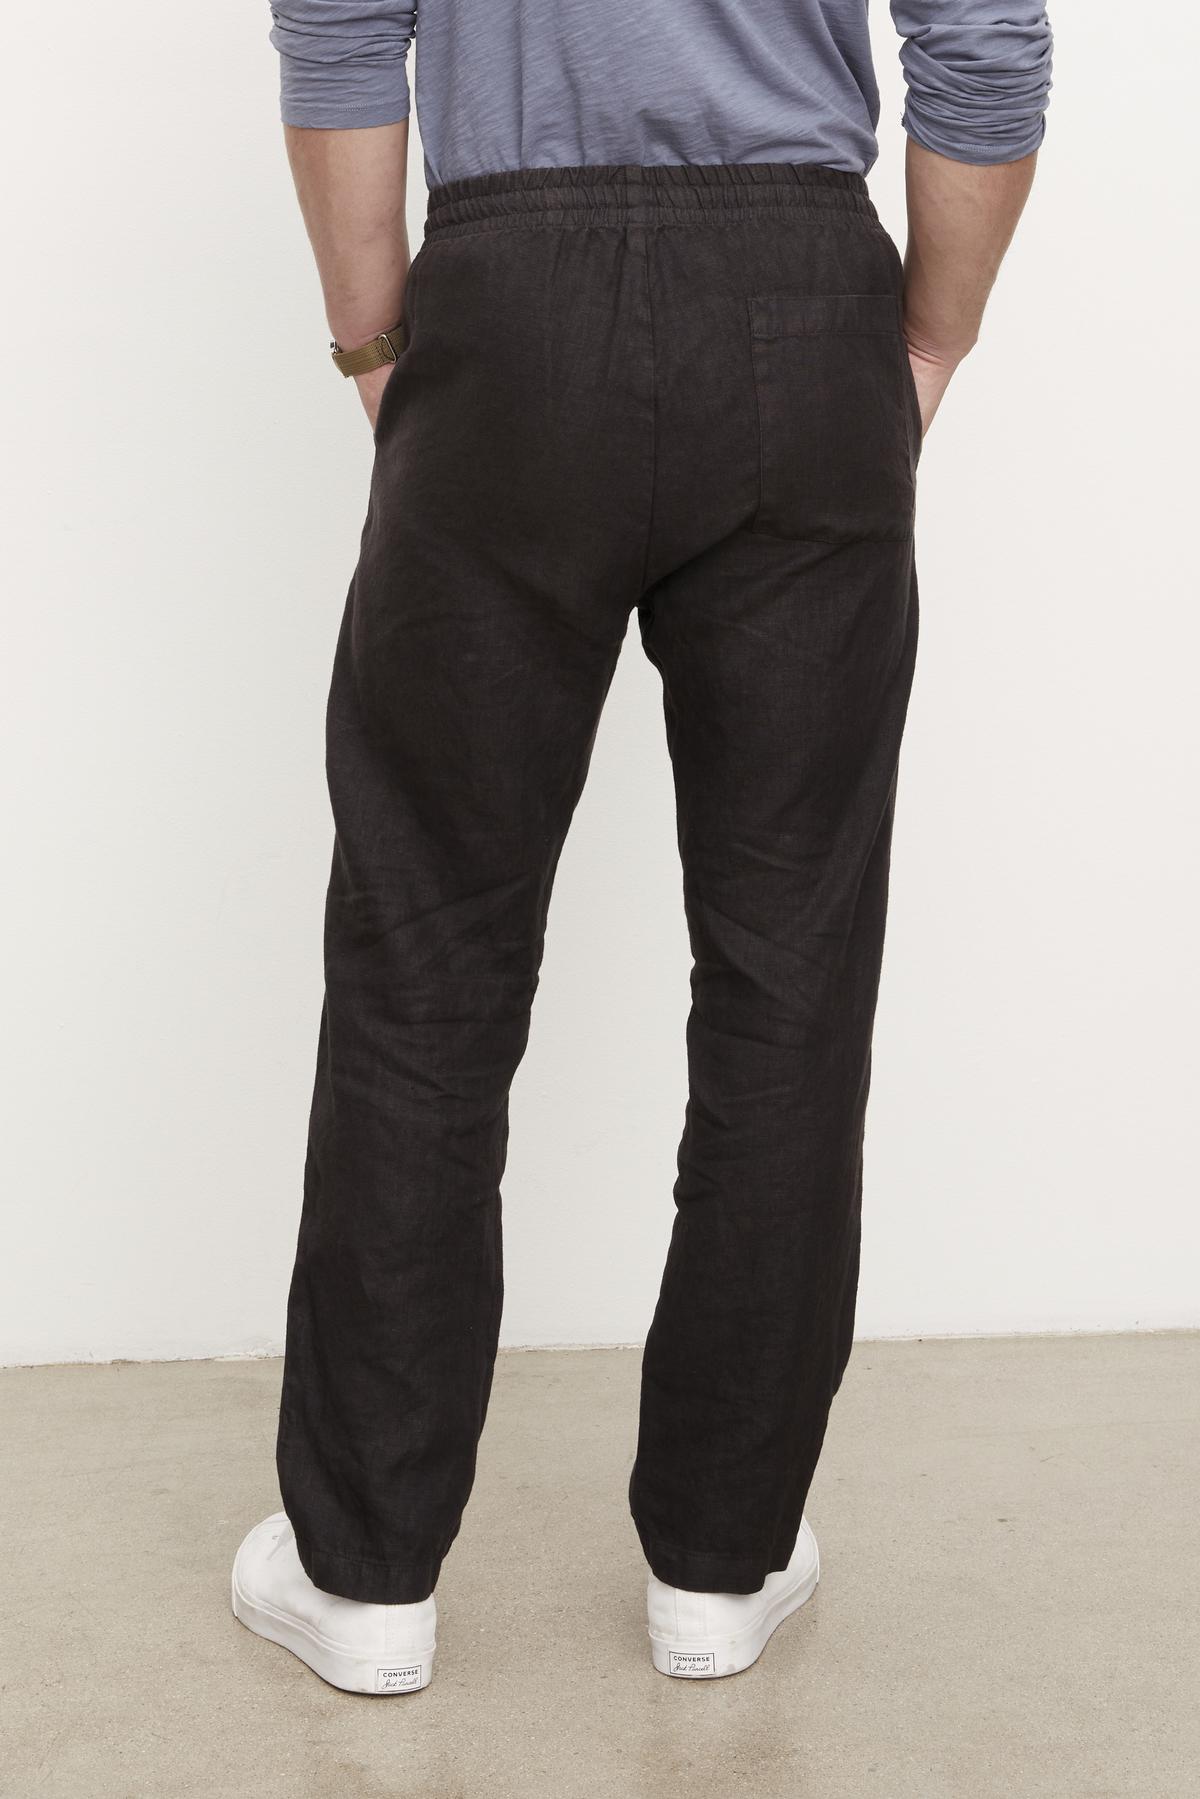 The back view of a man wearing Velvet by Graham & Spencer's Phelan Linen Pant.-36009949528257